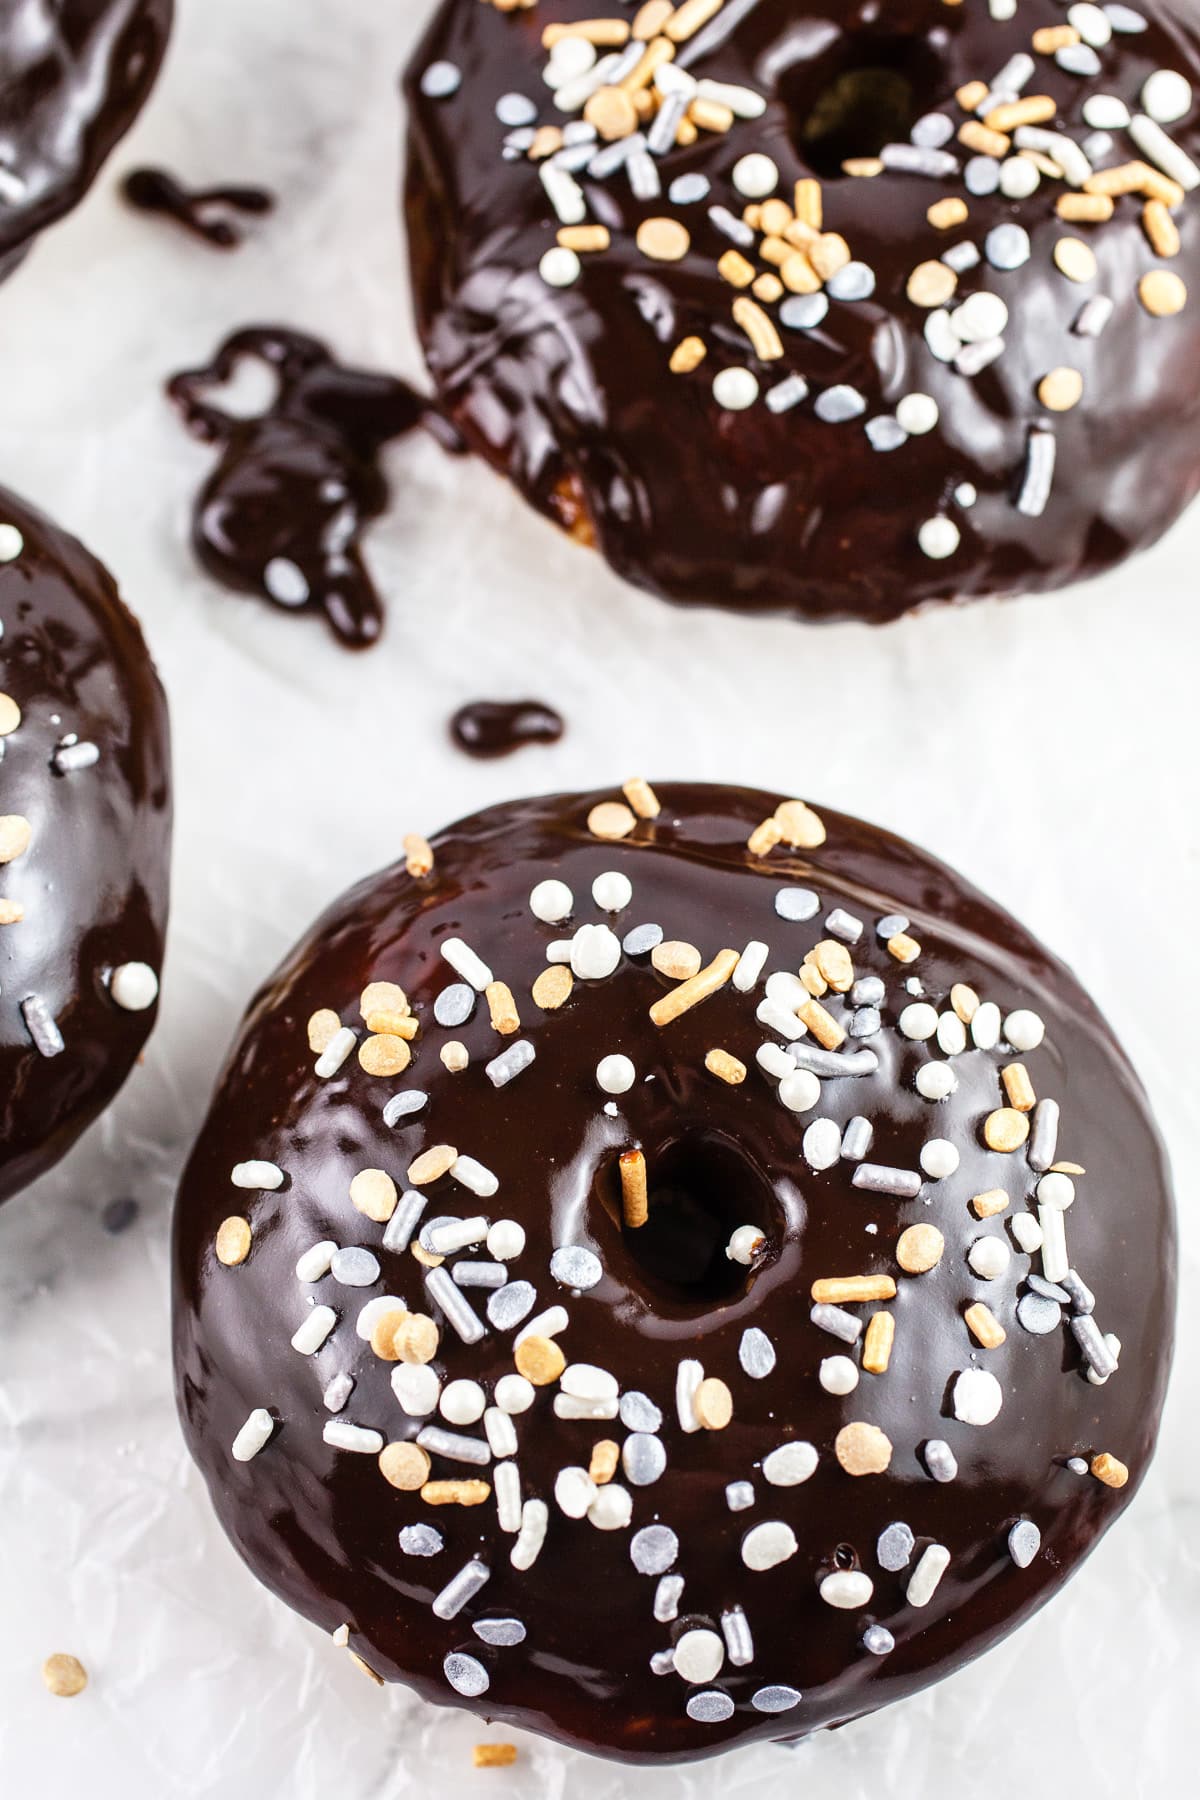 Baileys doughnuts with chocolate ganache and sprinkles.